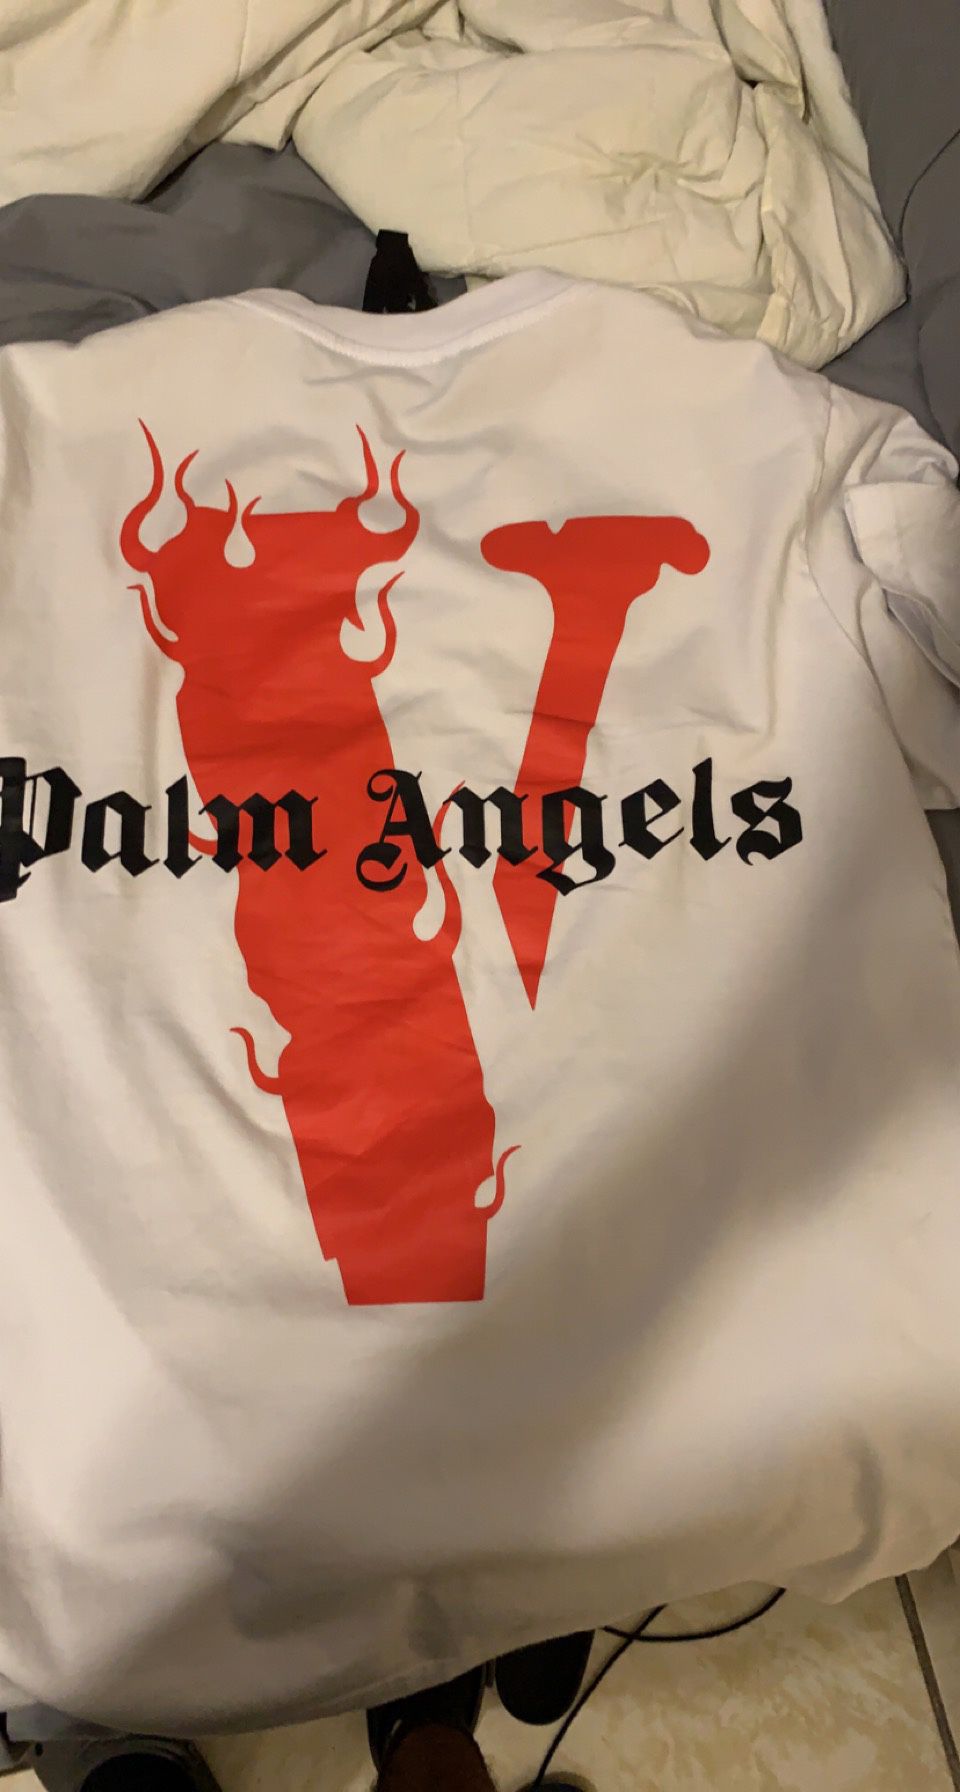 Vlone x Palm angels Shirt